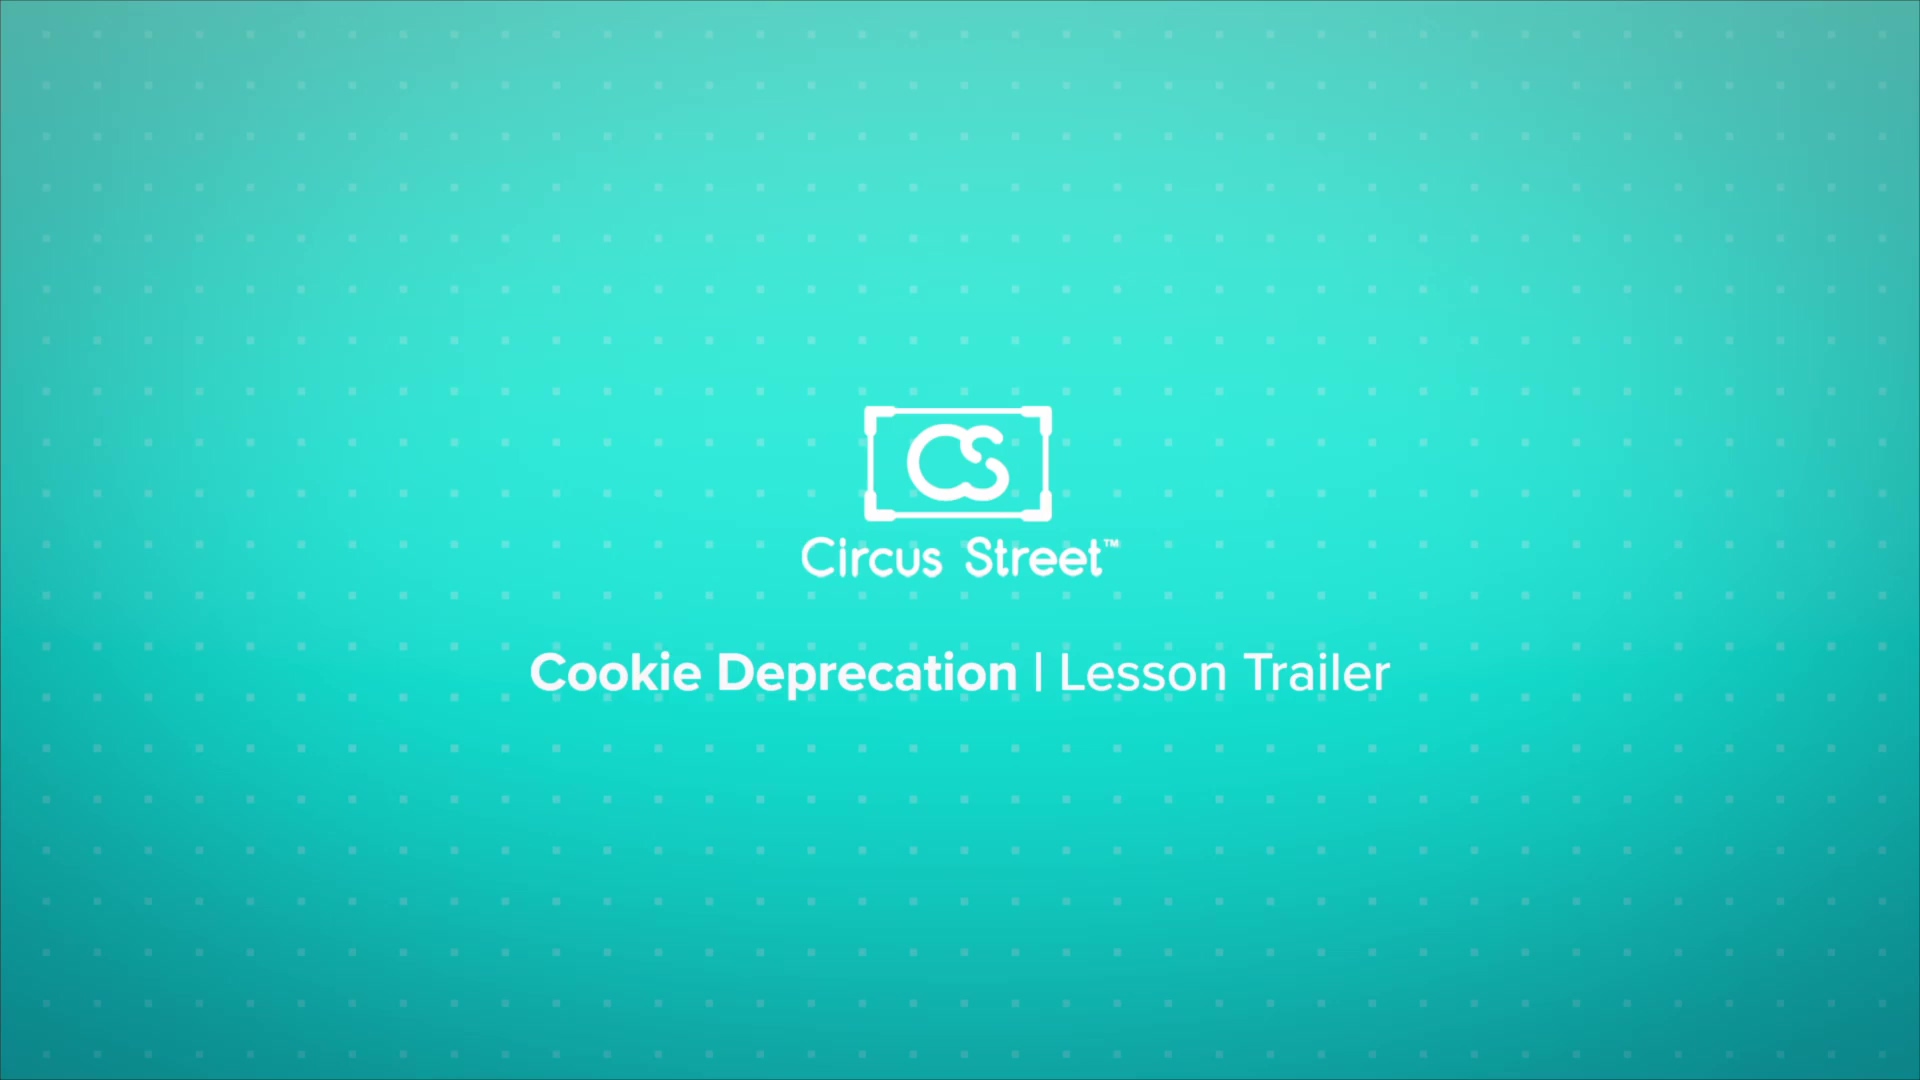 Cookie Deprecation Trailer